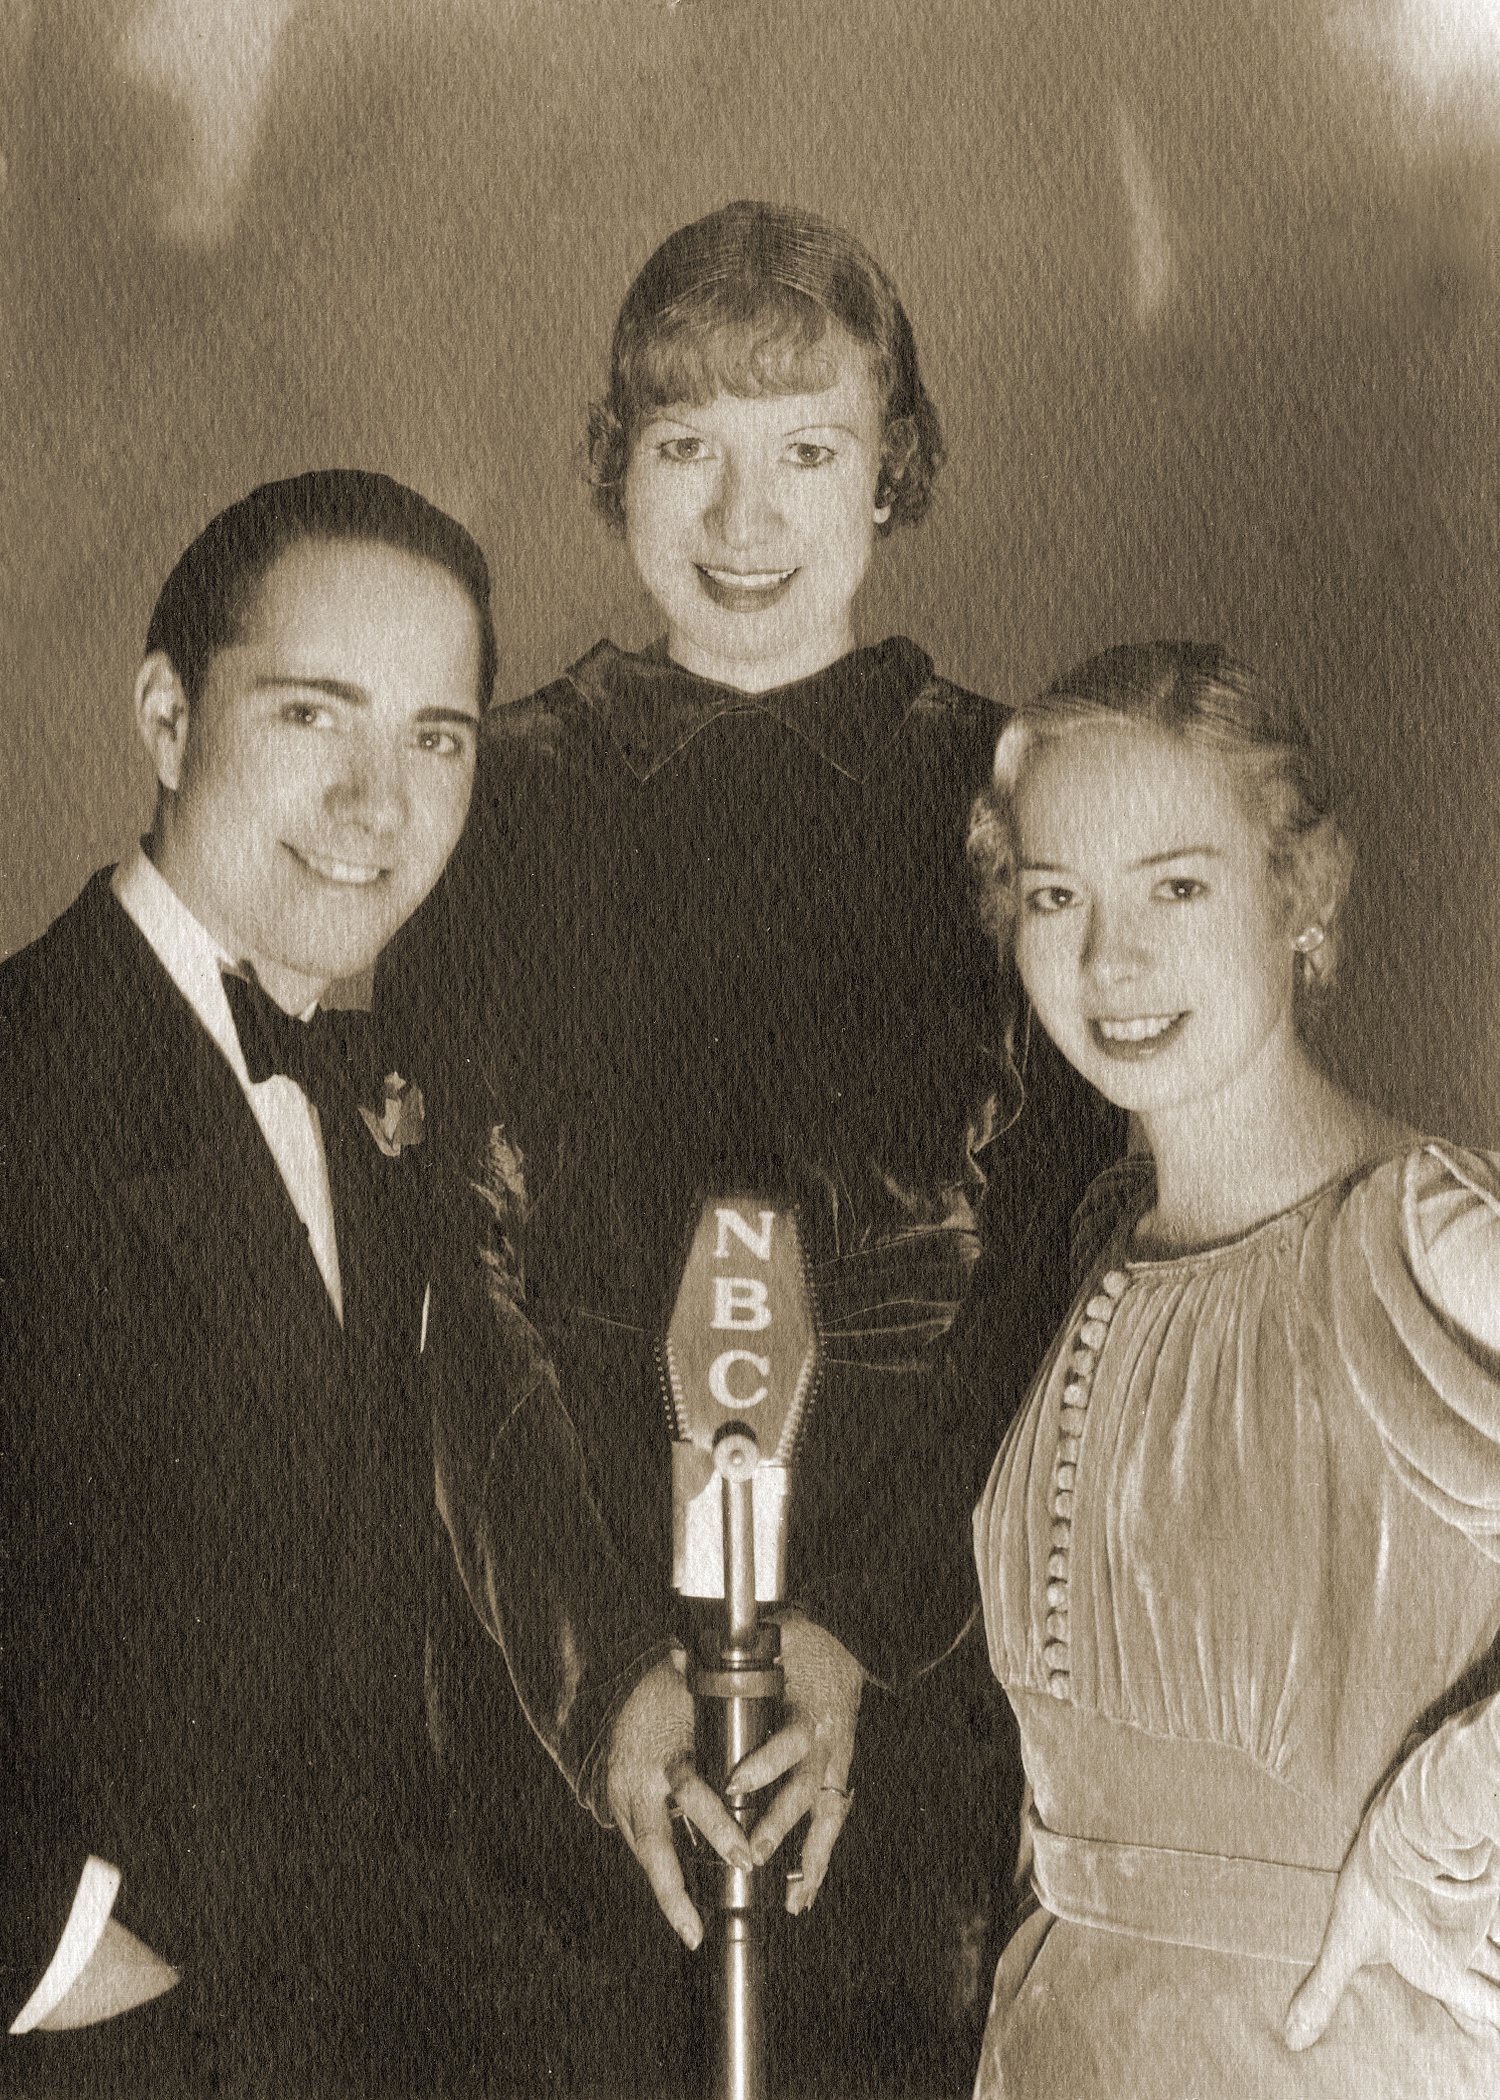 NBC Radio, New York - 1934